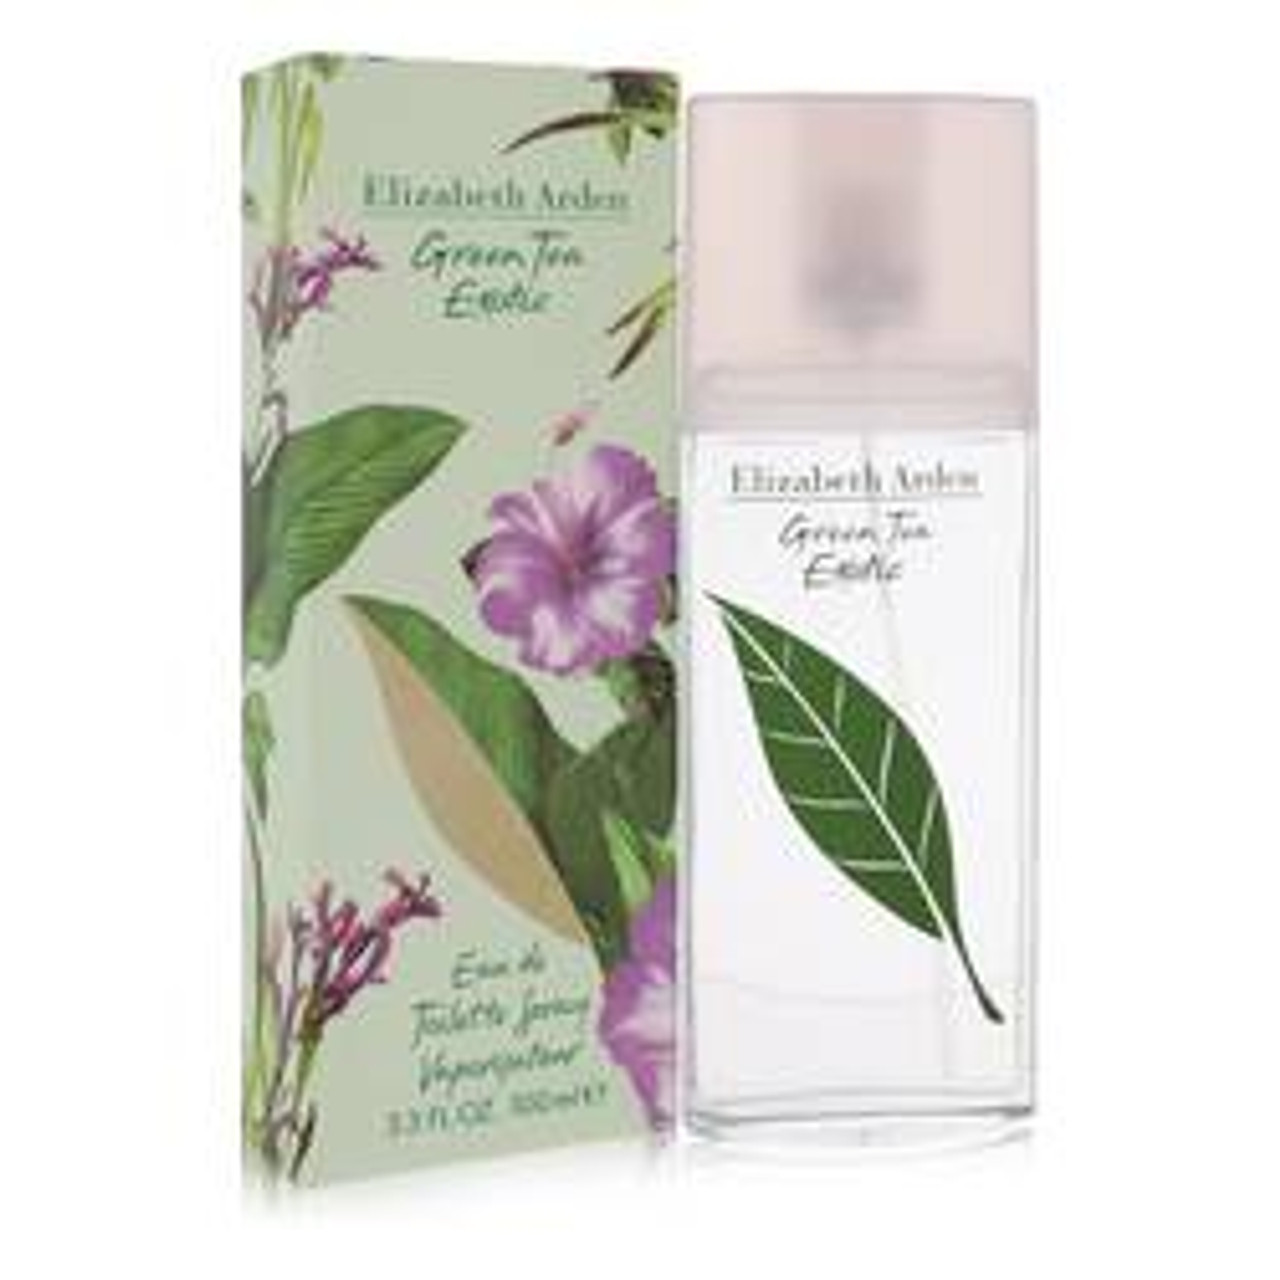 Green Tea Exotic Perfume By Elizabeth Arden Eau De Toilette Spray 3.4 oz for Women - [From 50.33 - Choose pk Qty ] - *Ships from Miami